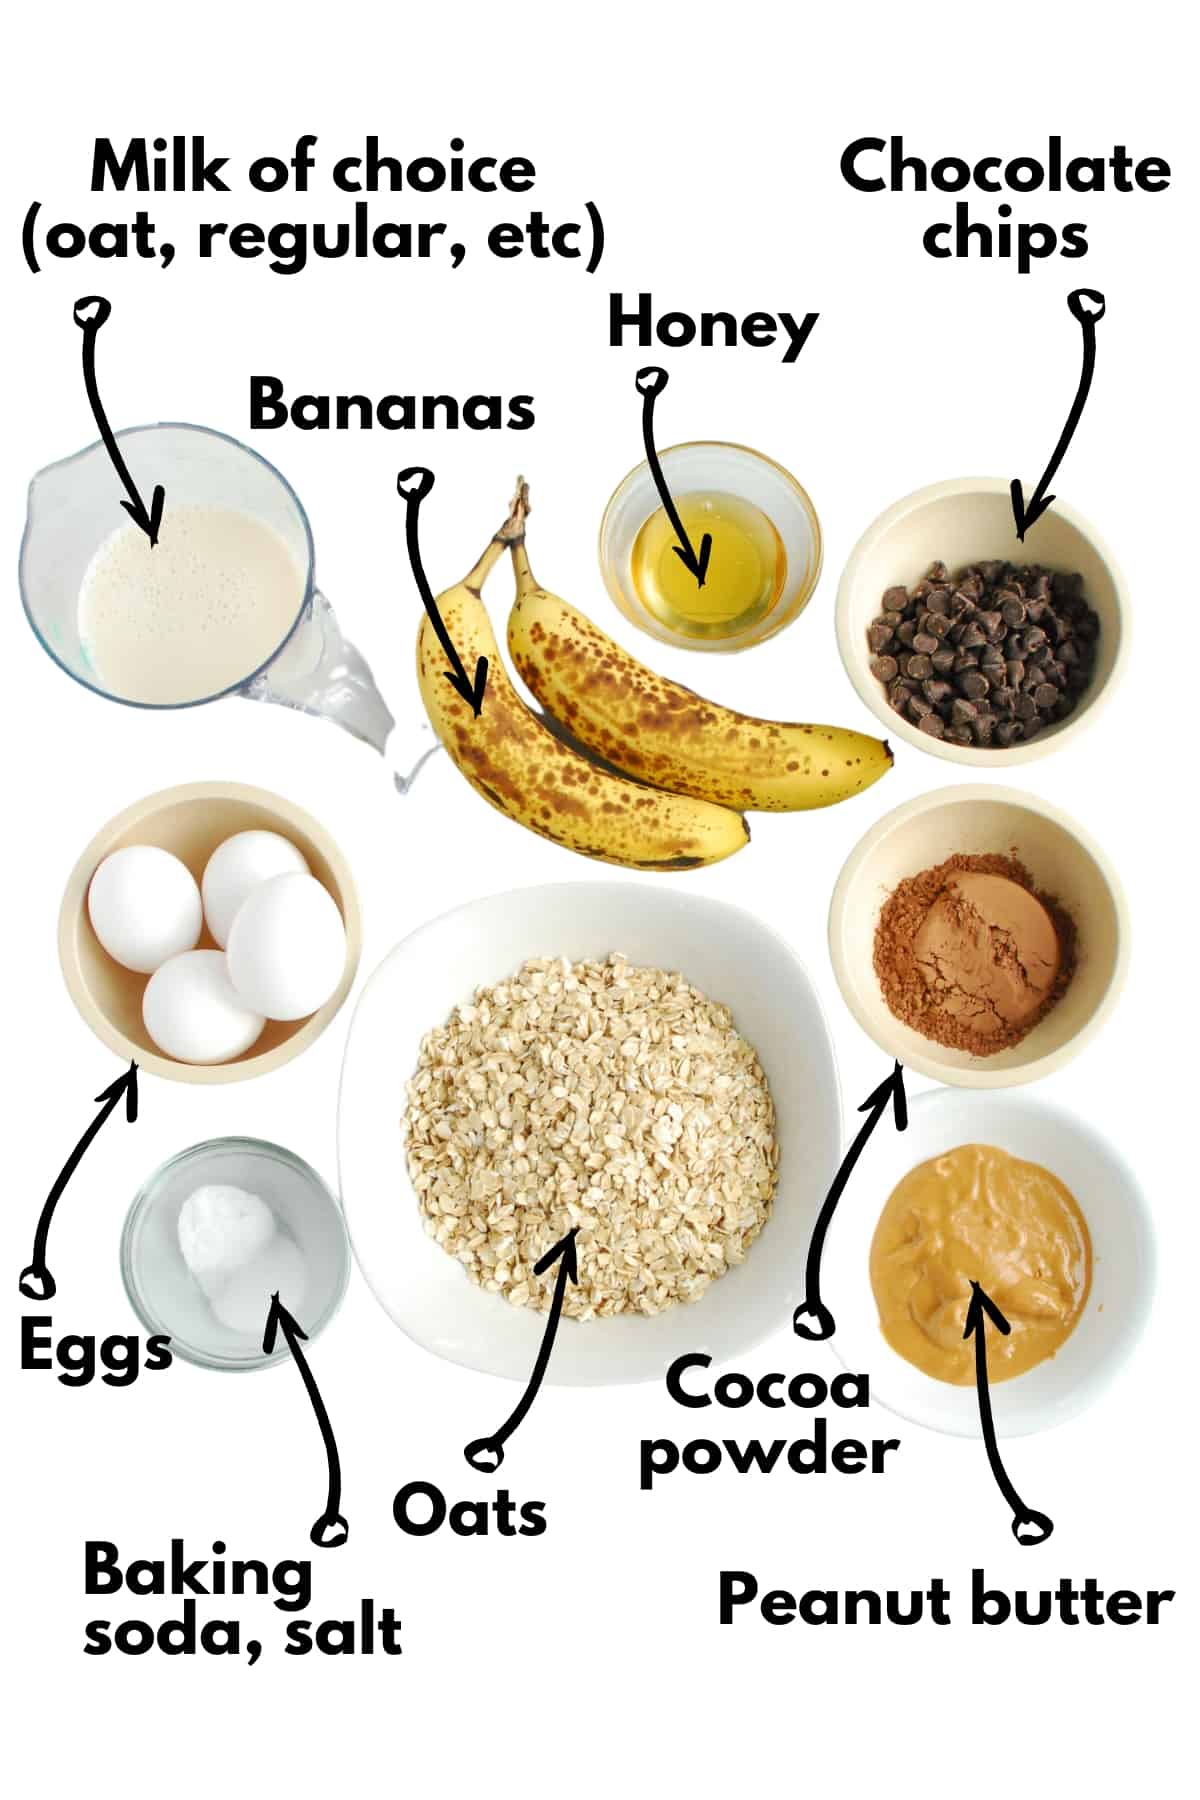 Oat milk, bananas, honey, chocolate chips, peanut butter, cocoa powder, oats, baking soda, salt, and eggs.